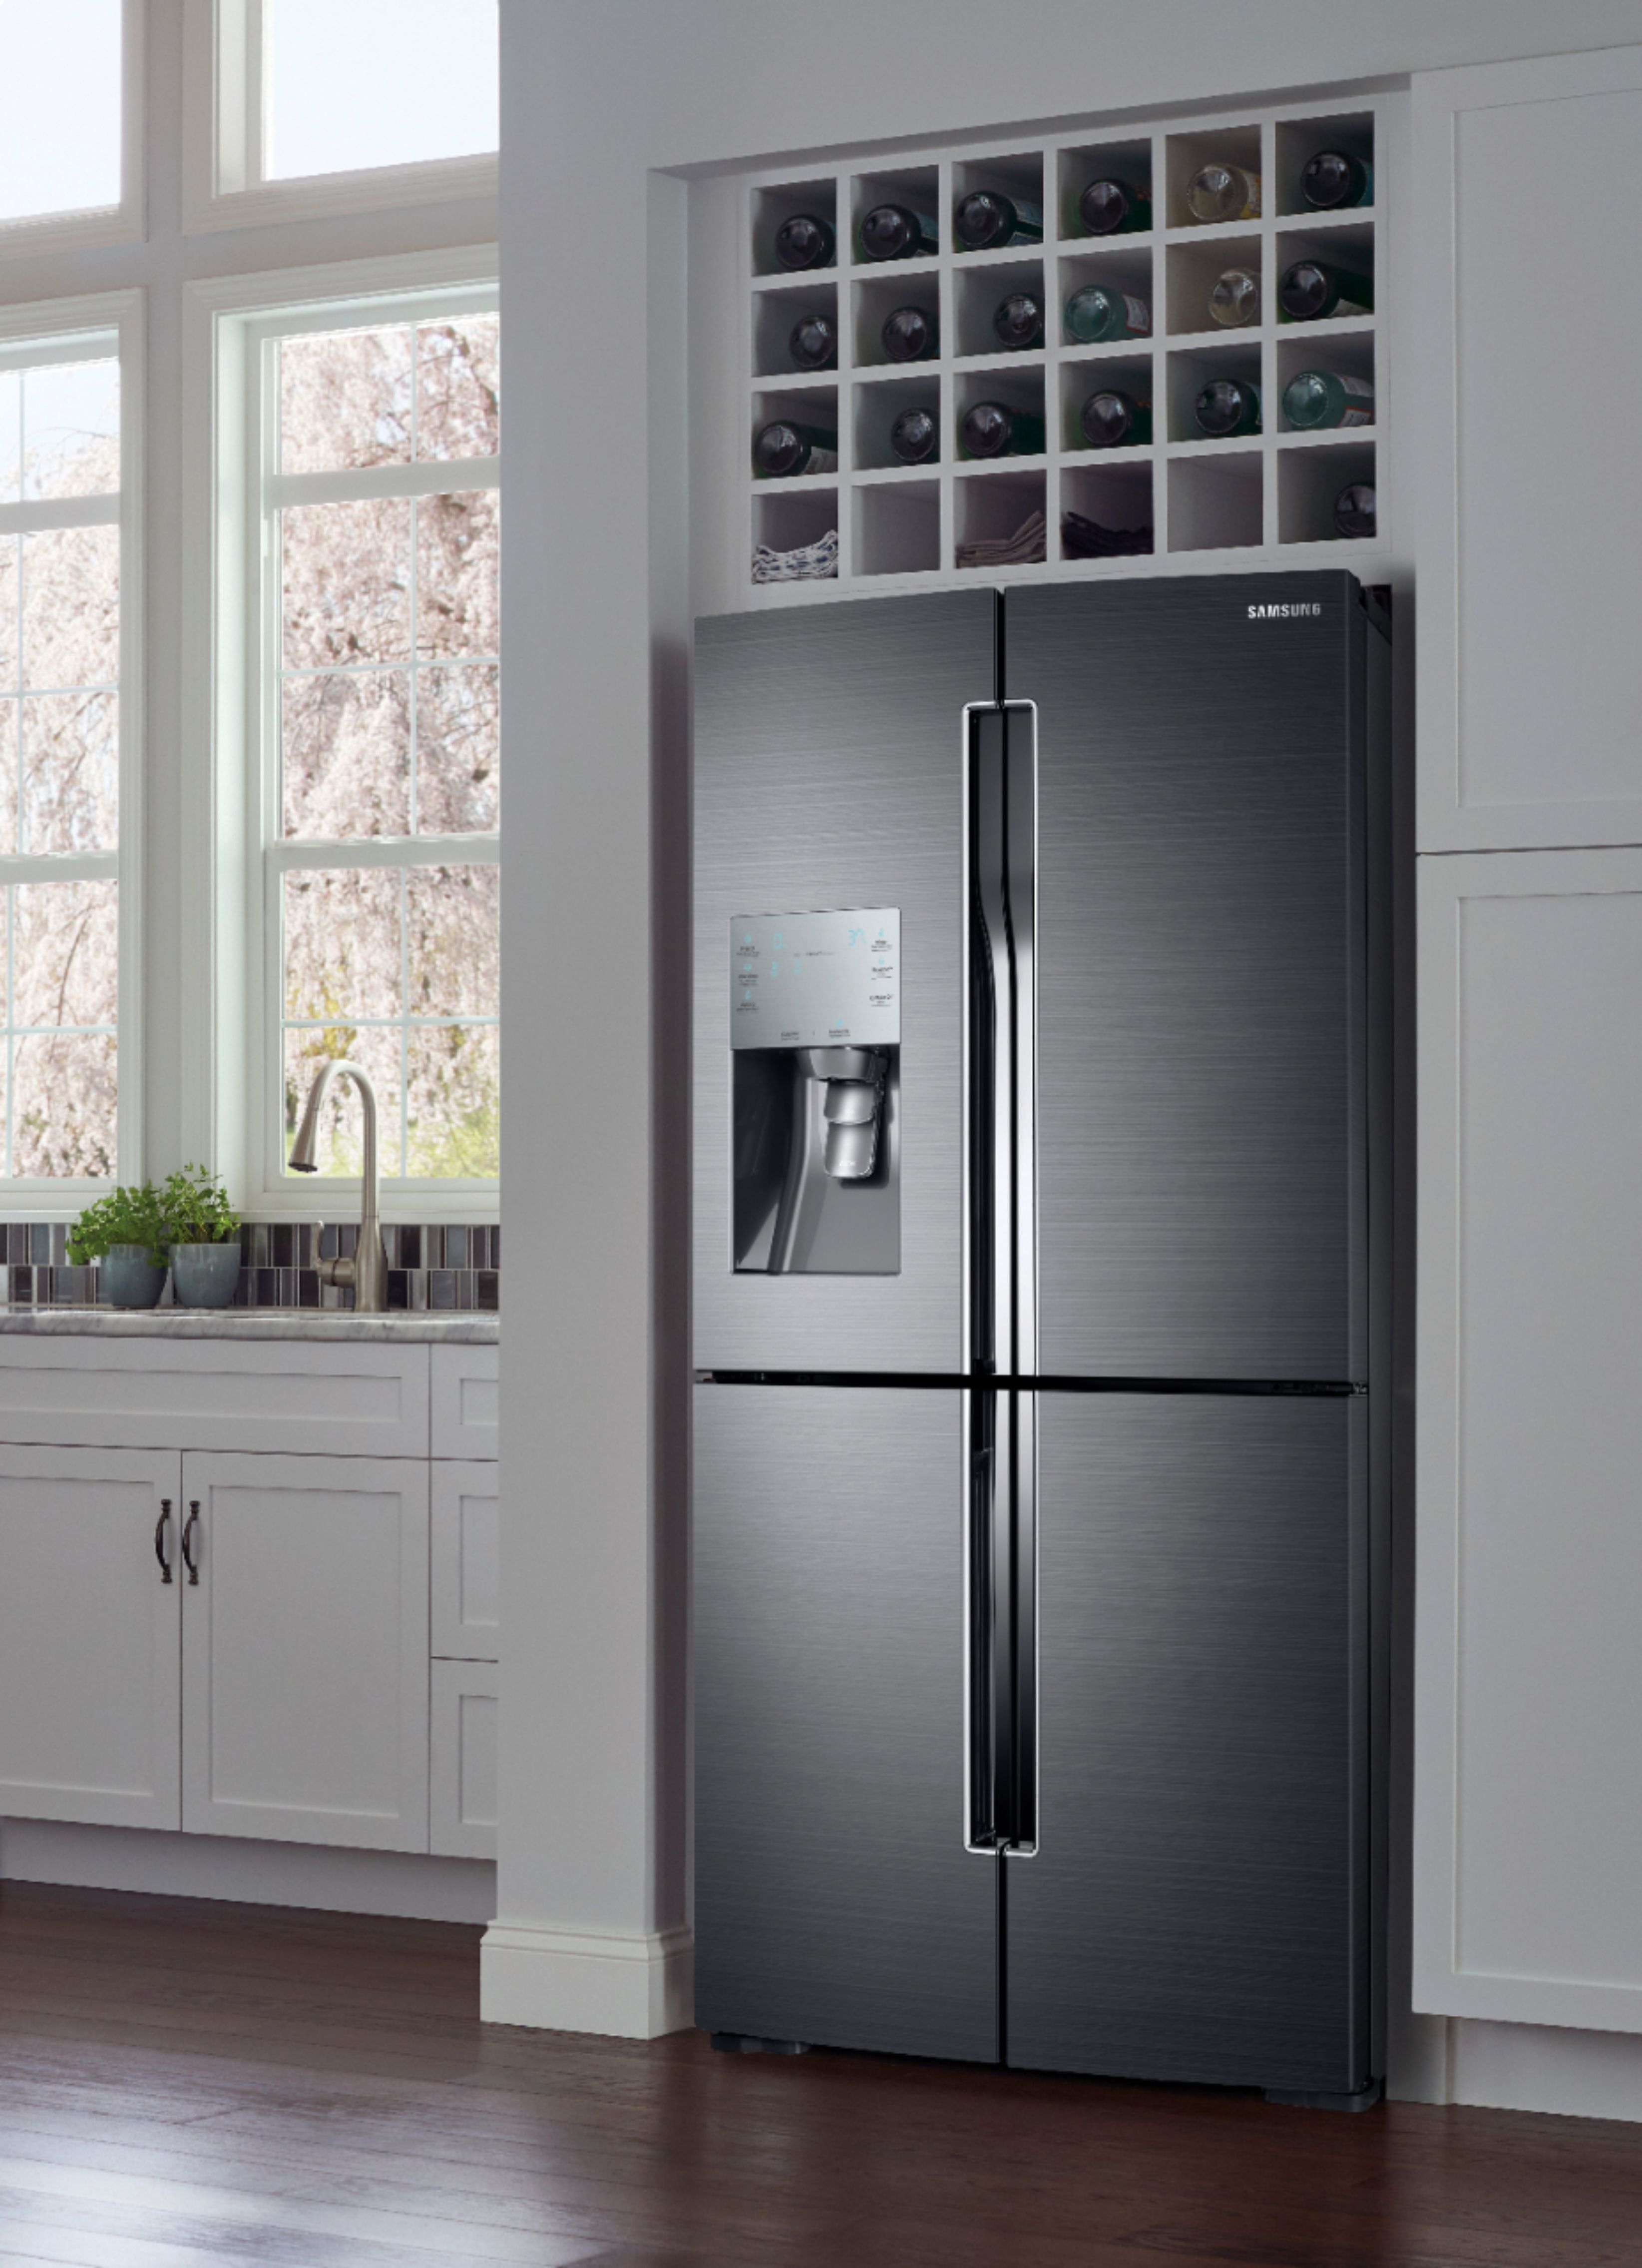 Samsung introduces new BESPOKE refrigerator | JCG Magazine